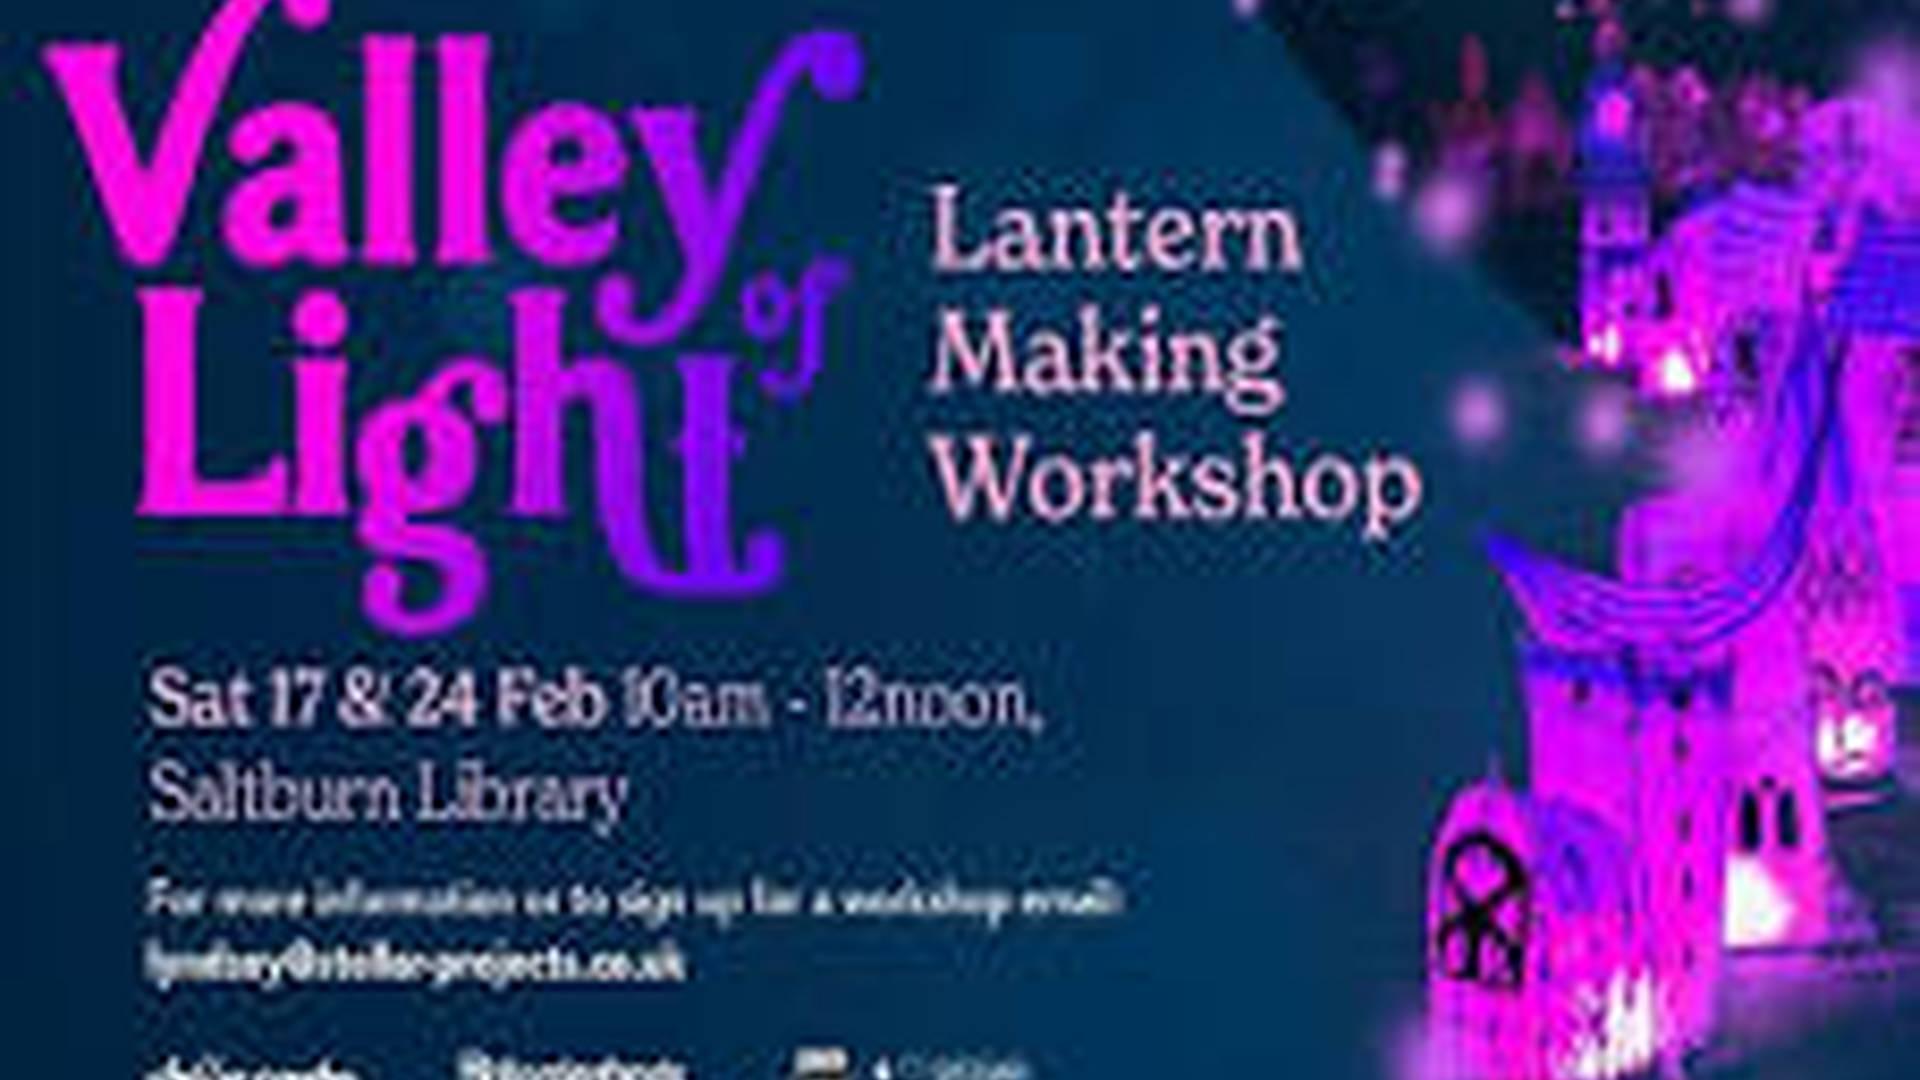 Valley of Light Lantern Making Workshops! photo